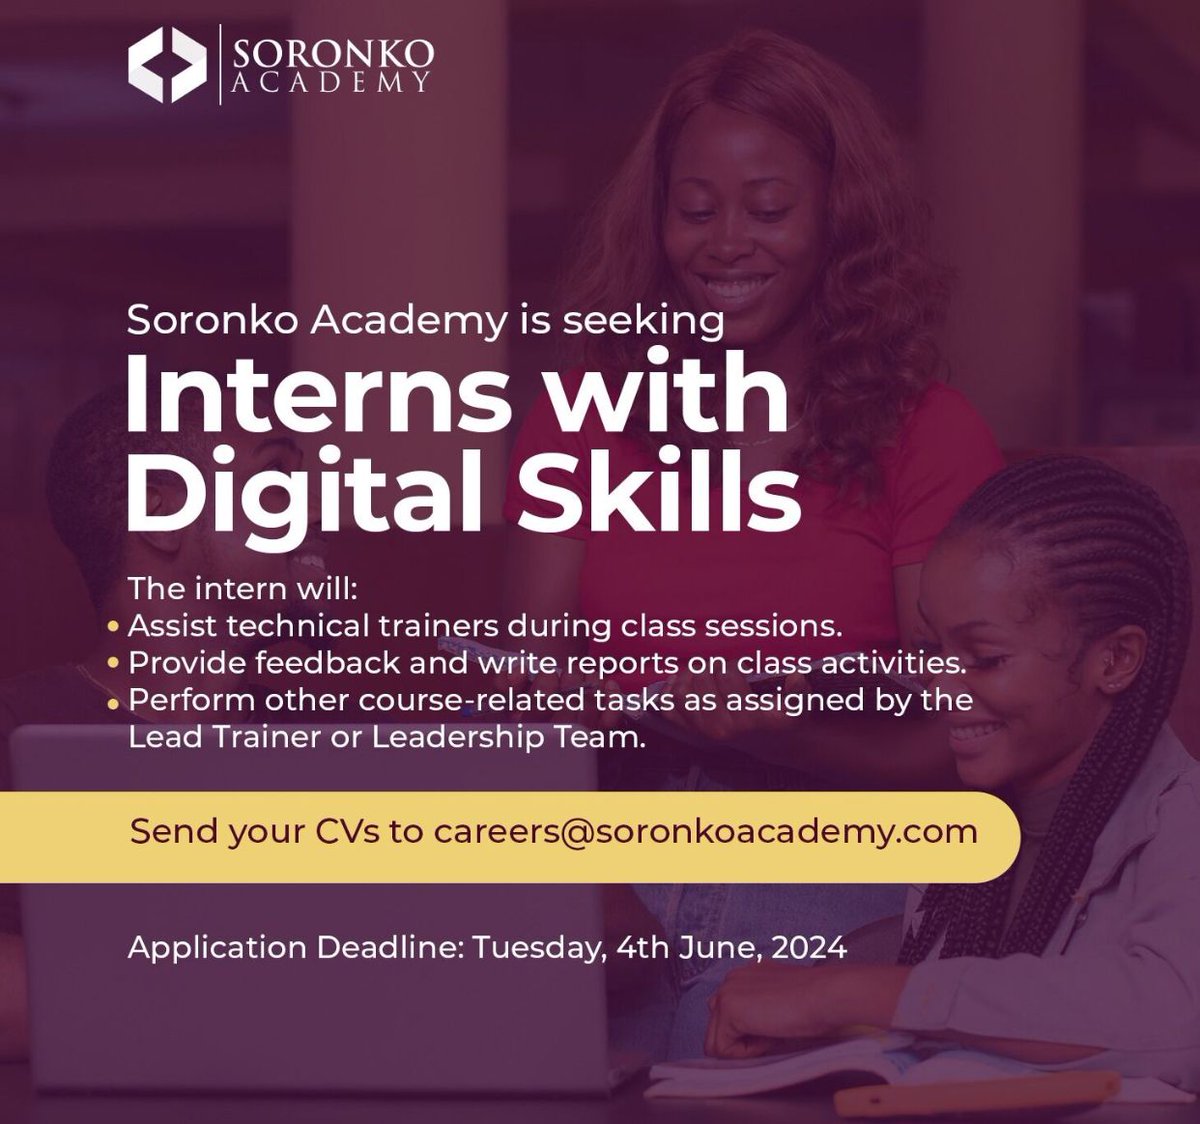 Soronko Academy is seeking
Interns with Digital Skills

Send your CVs to careers@soronkoacademy.com
Application Deadline: Tuesday, 4th June, 2024